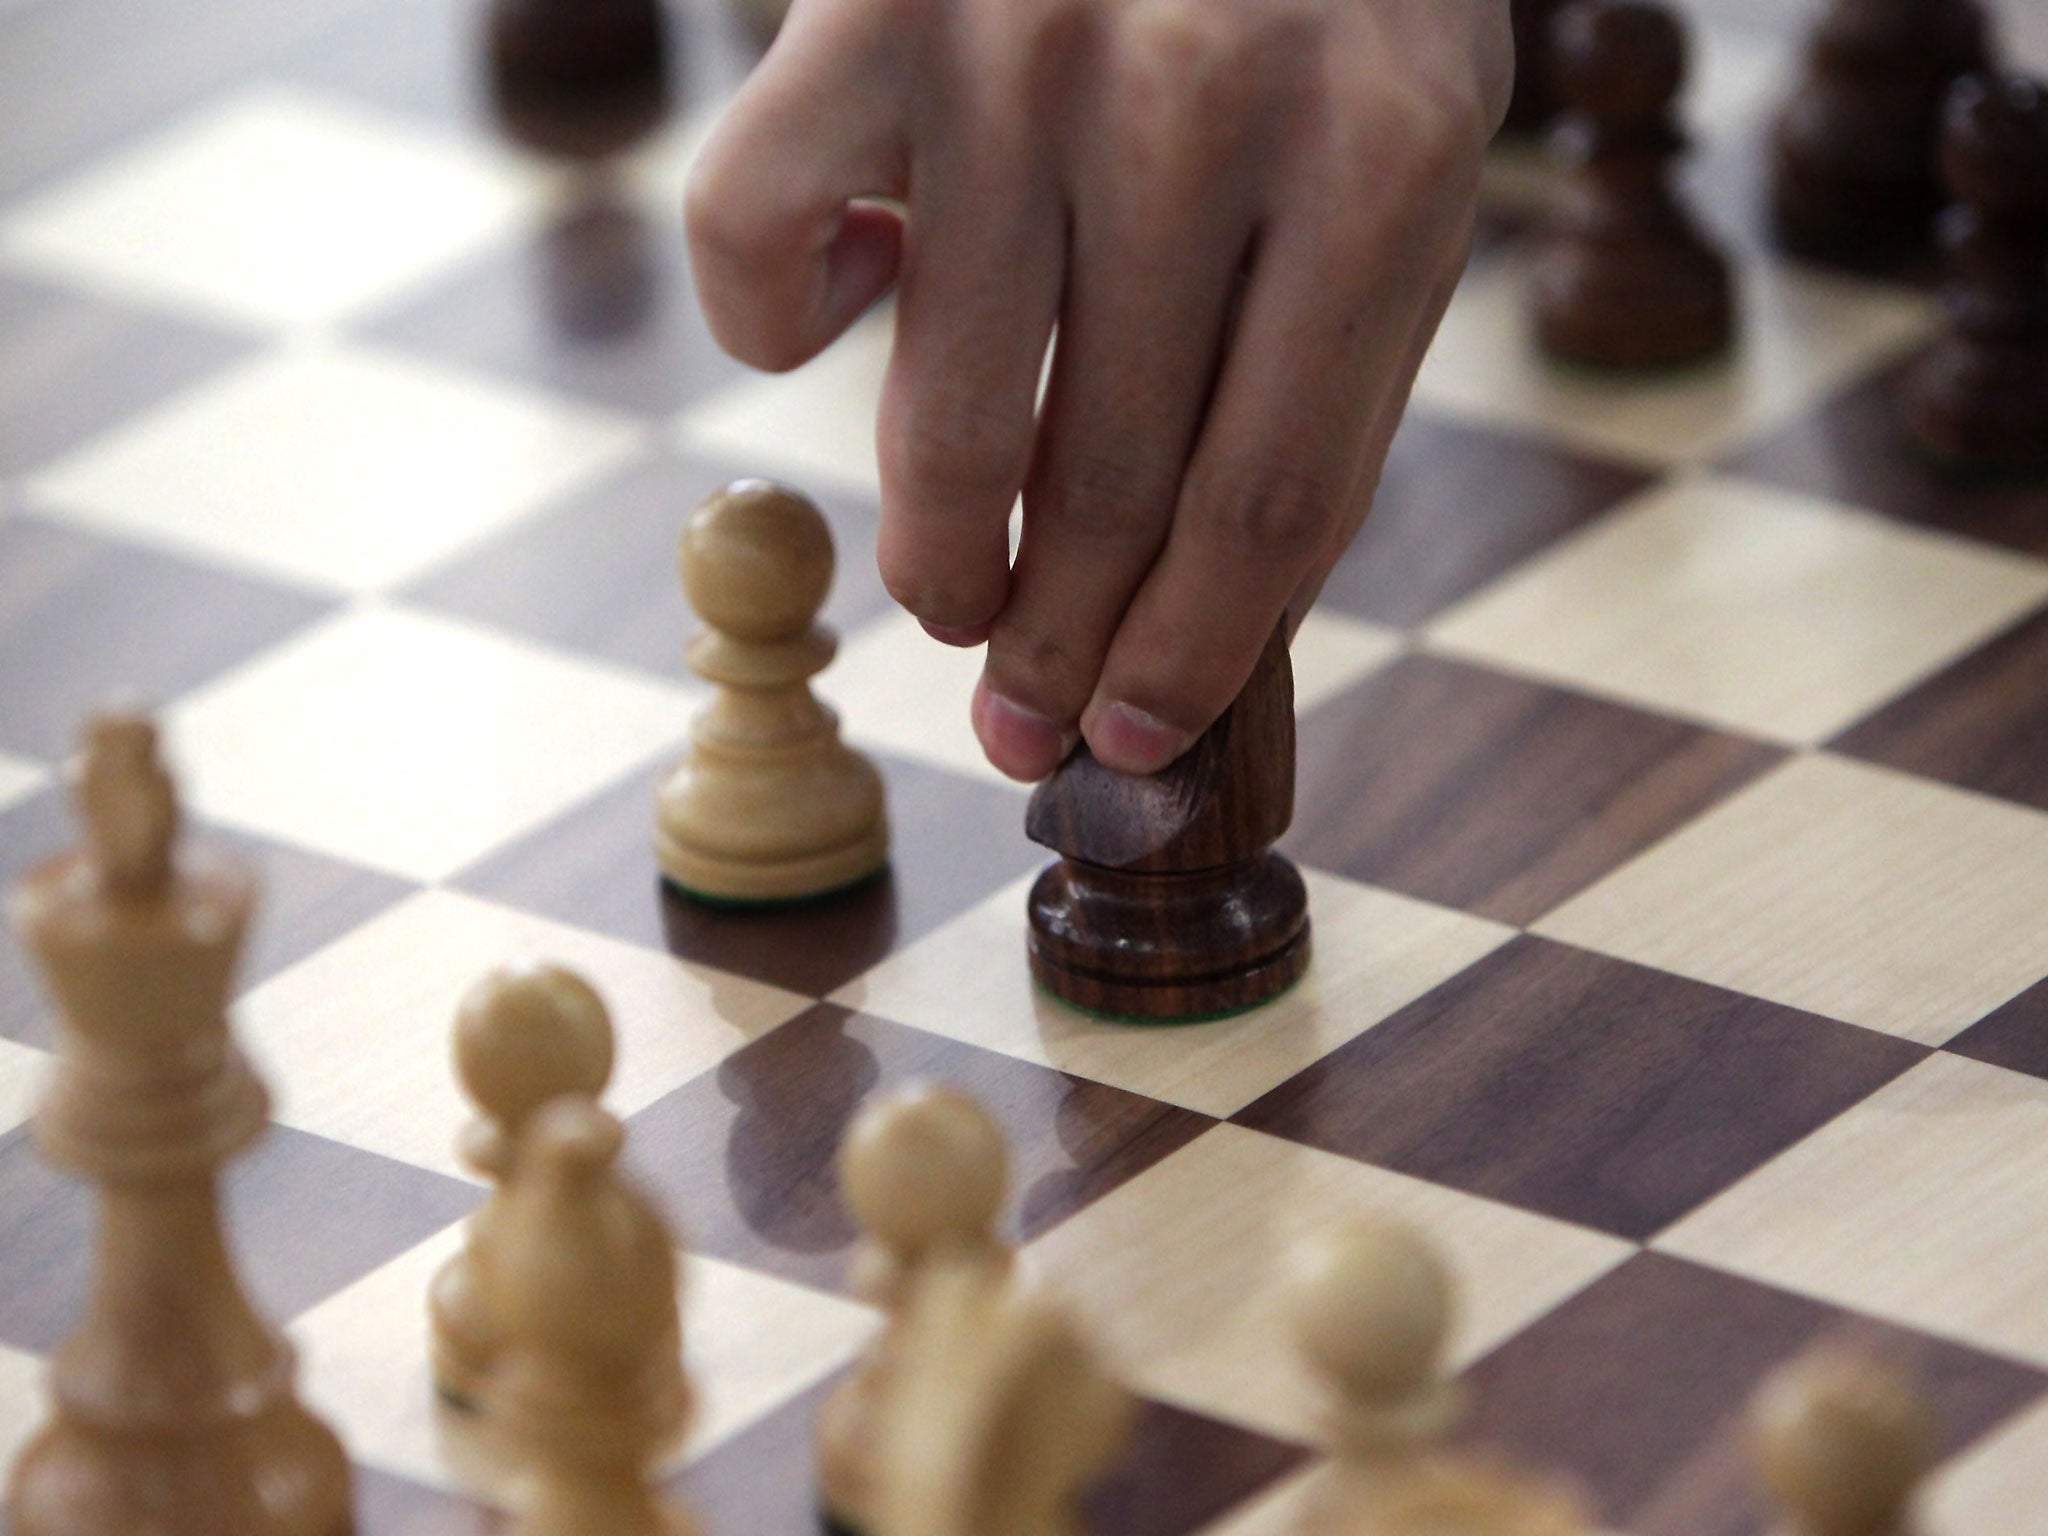 Checkmate! Georgian Chess Grandmaster caught cheating using a